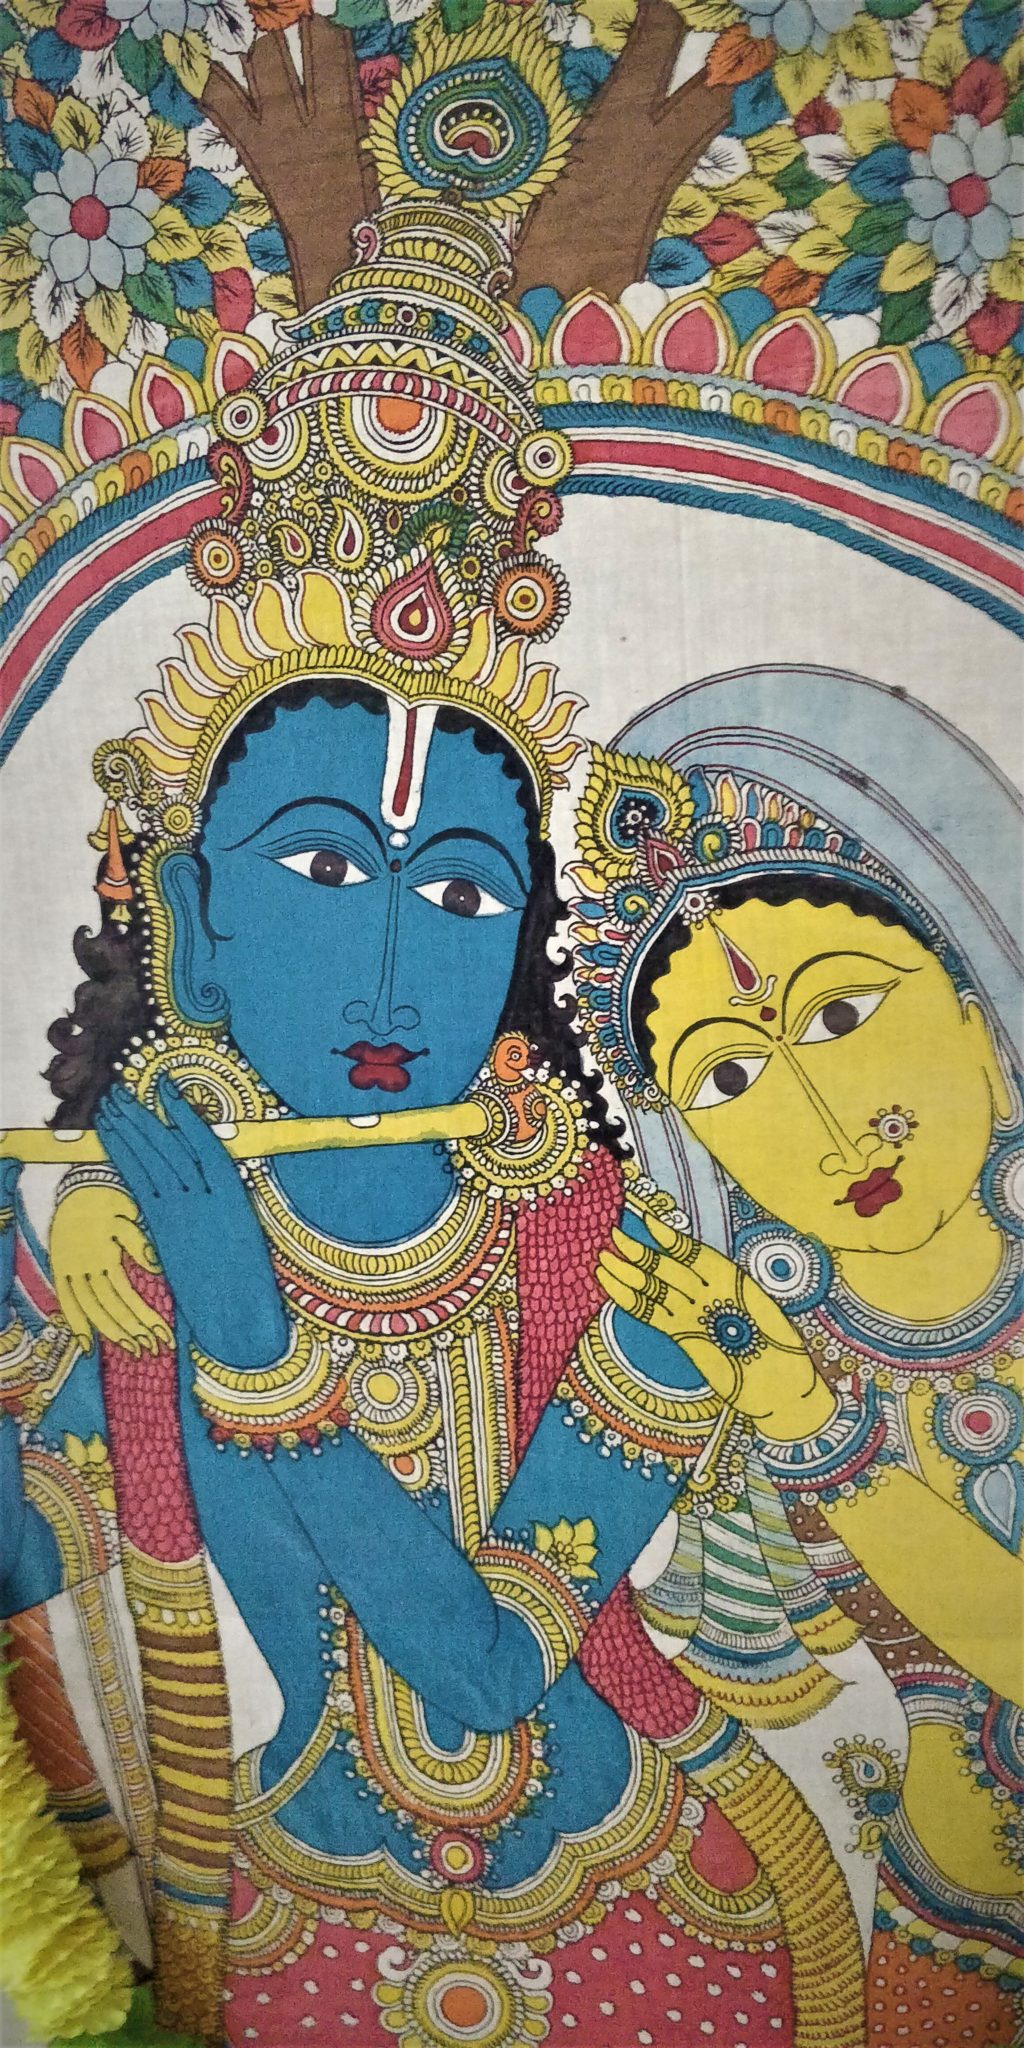 Kalamkari Painting